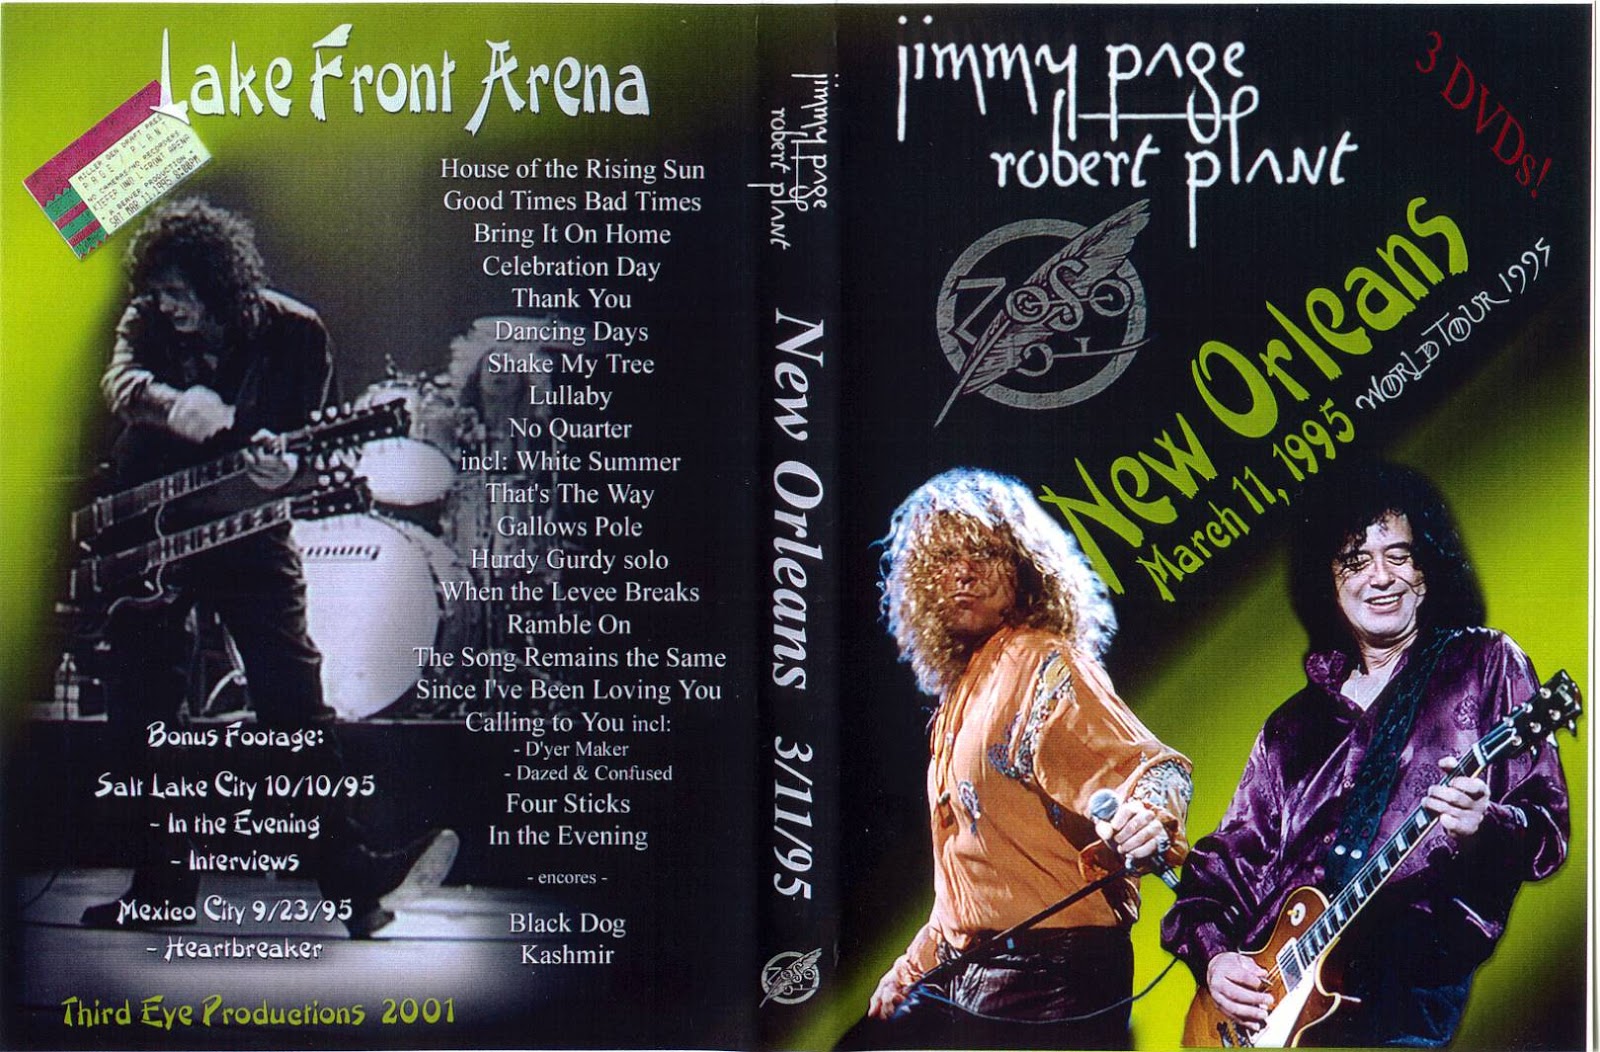 Page plant. Плант и пейдж. Jimmy Page & Robert Plant - 1995. No Quarter Джимми пейдж. No Quarter двд Джимми пейдж.